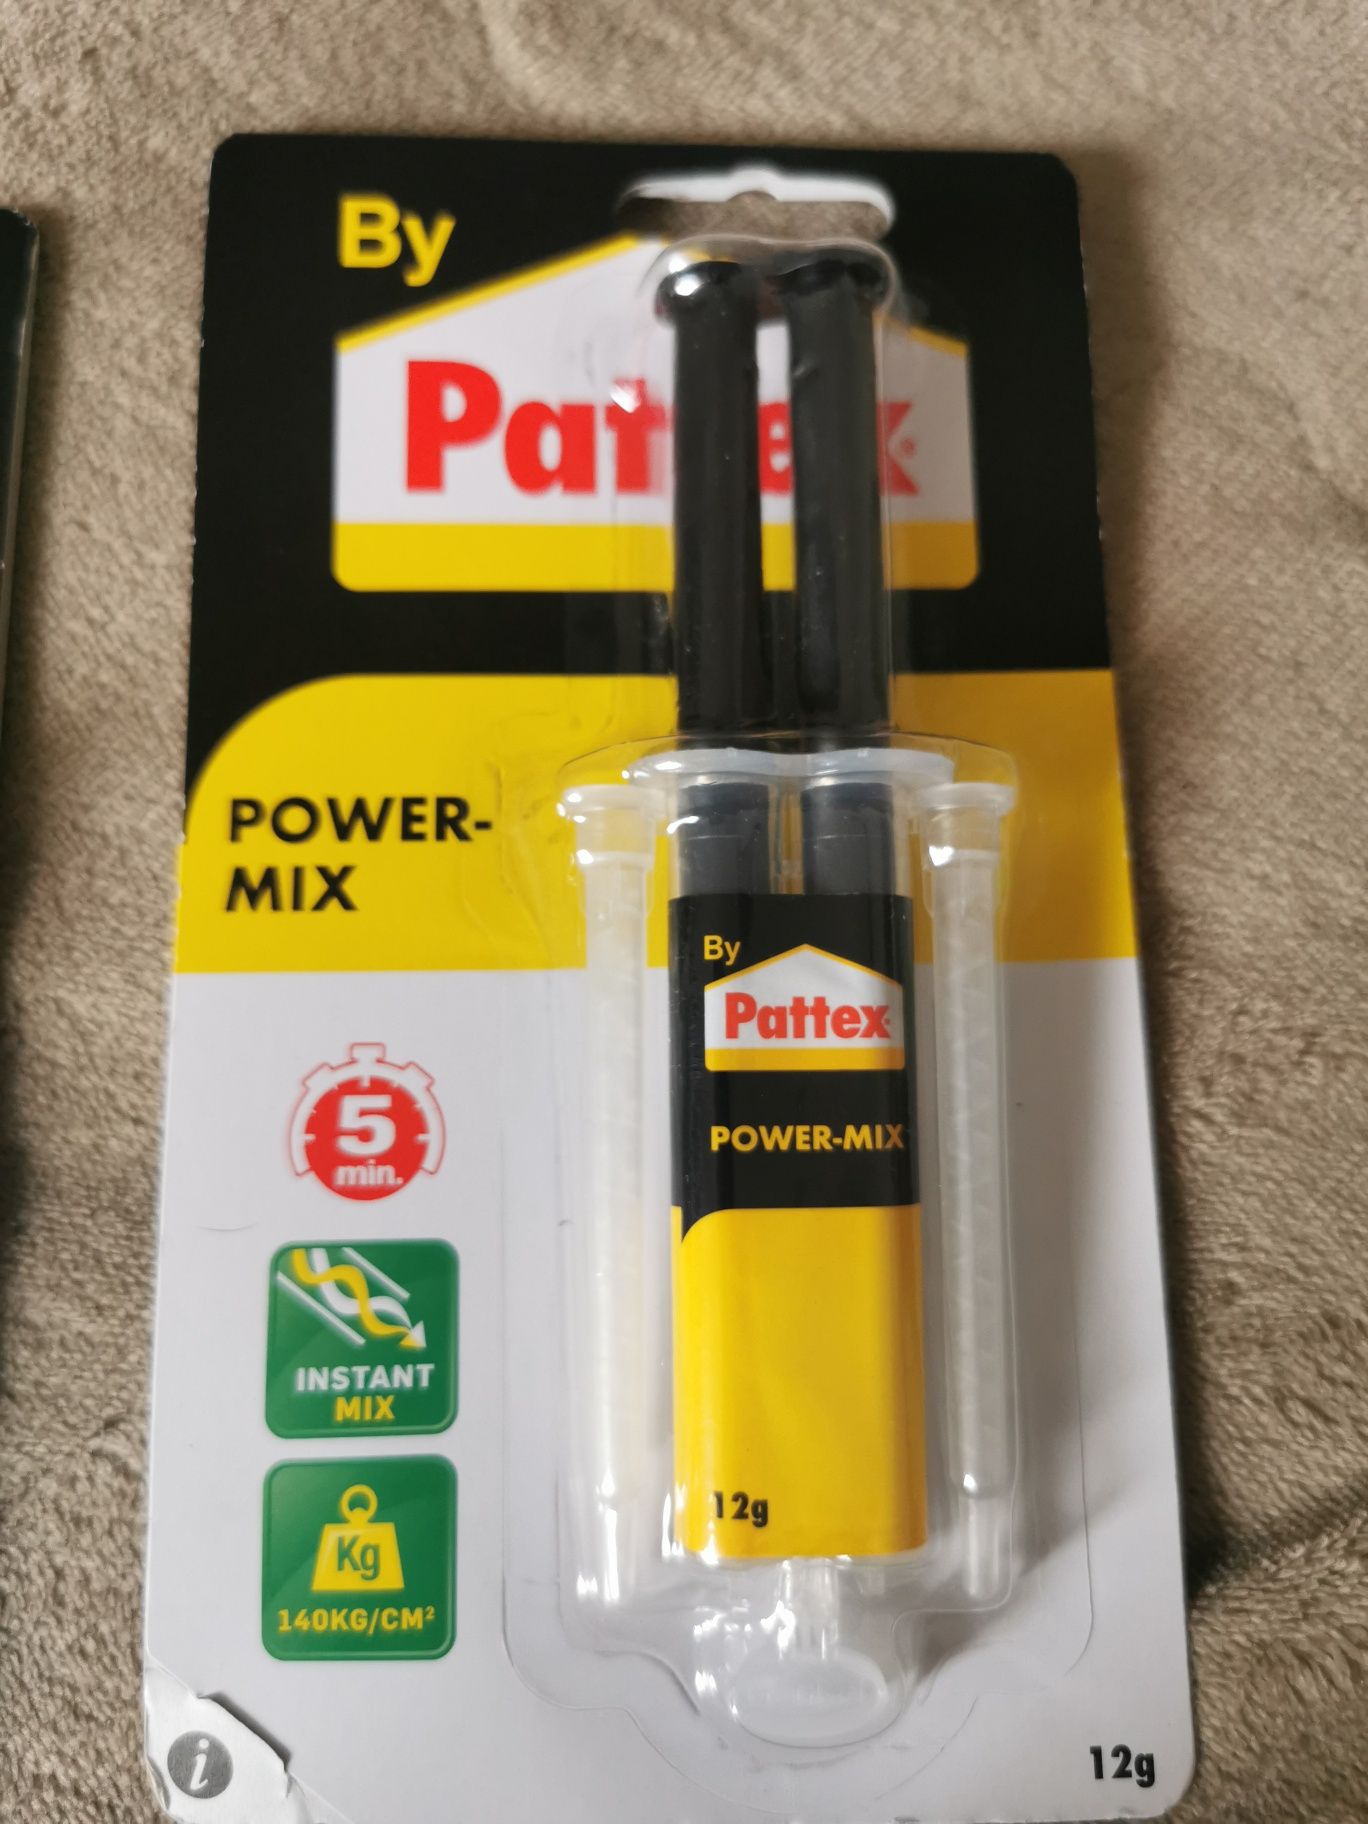 Pattex power-mix